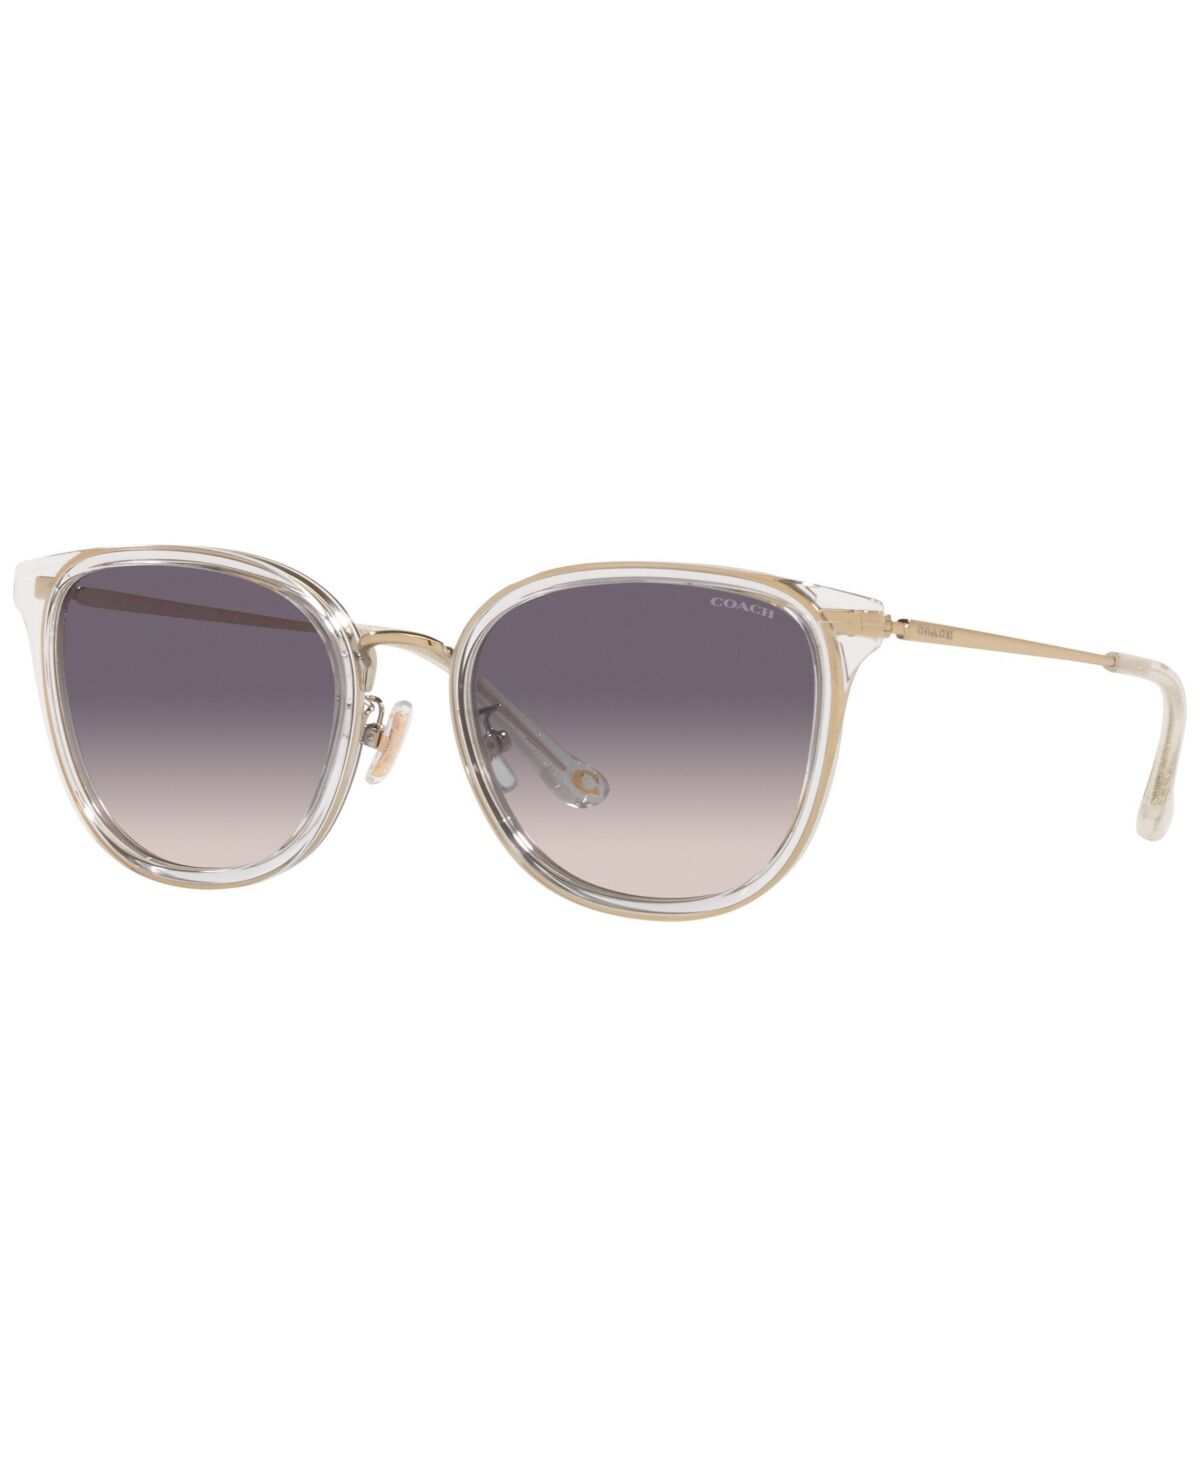 Coach Women's Sunglasses, HC7135 C7999 54 - Light Gold-Tone, Crystal